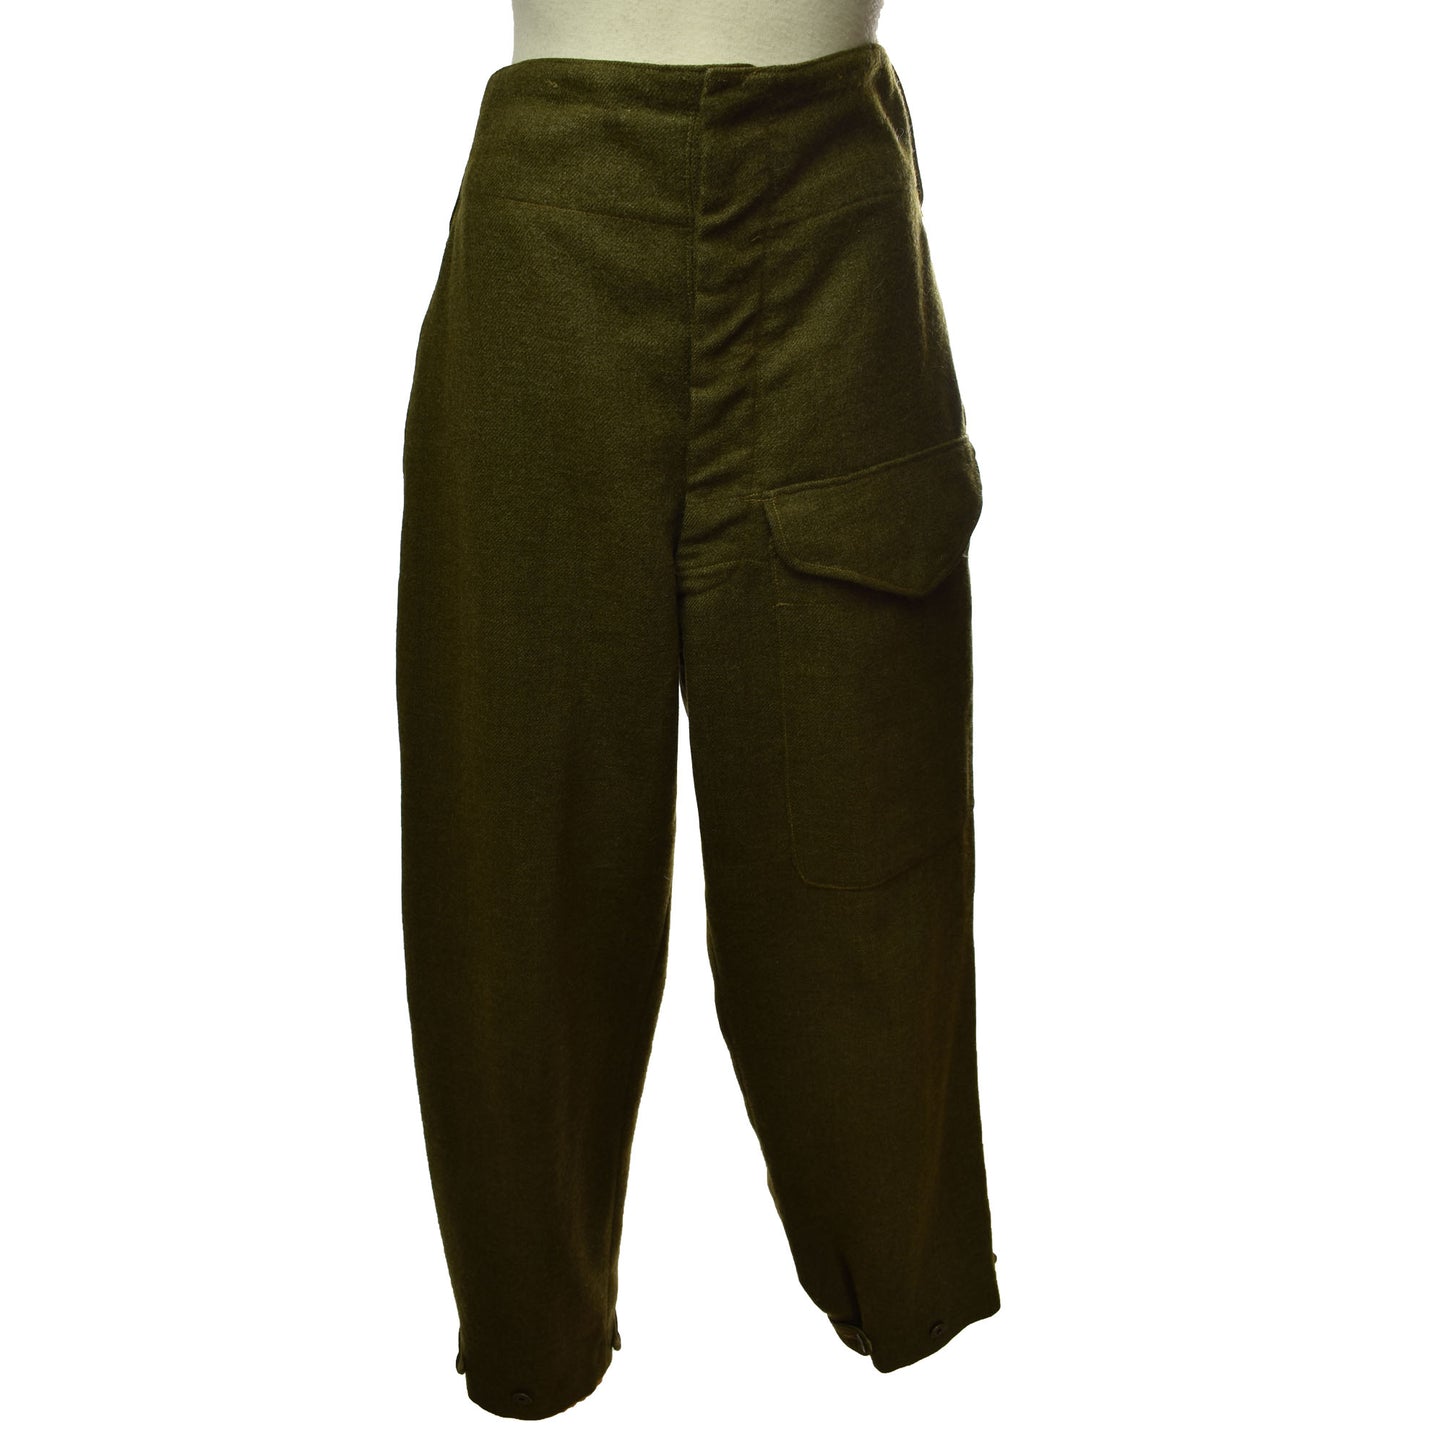 Vintage 1952 Maritime US Army Wool Military Pants